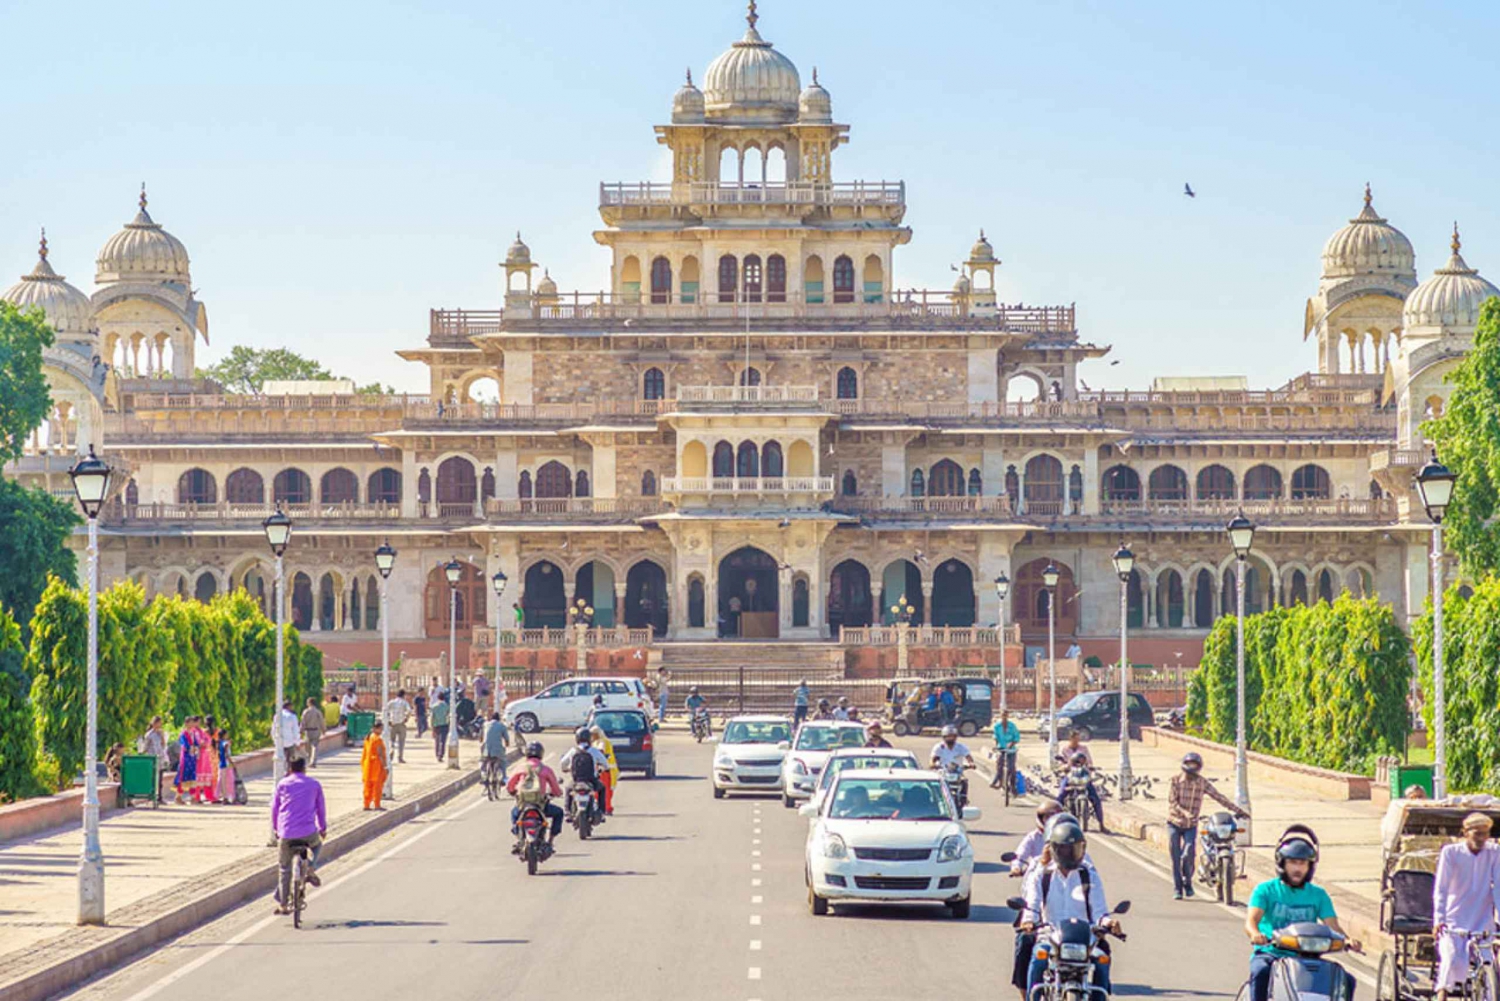 Agra til Jaipur drosje via Fatehpur Sikri & abhaneri stepwell